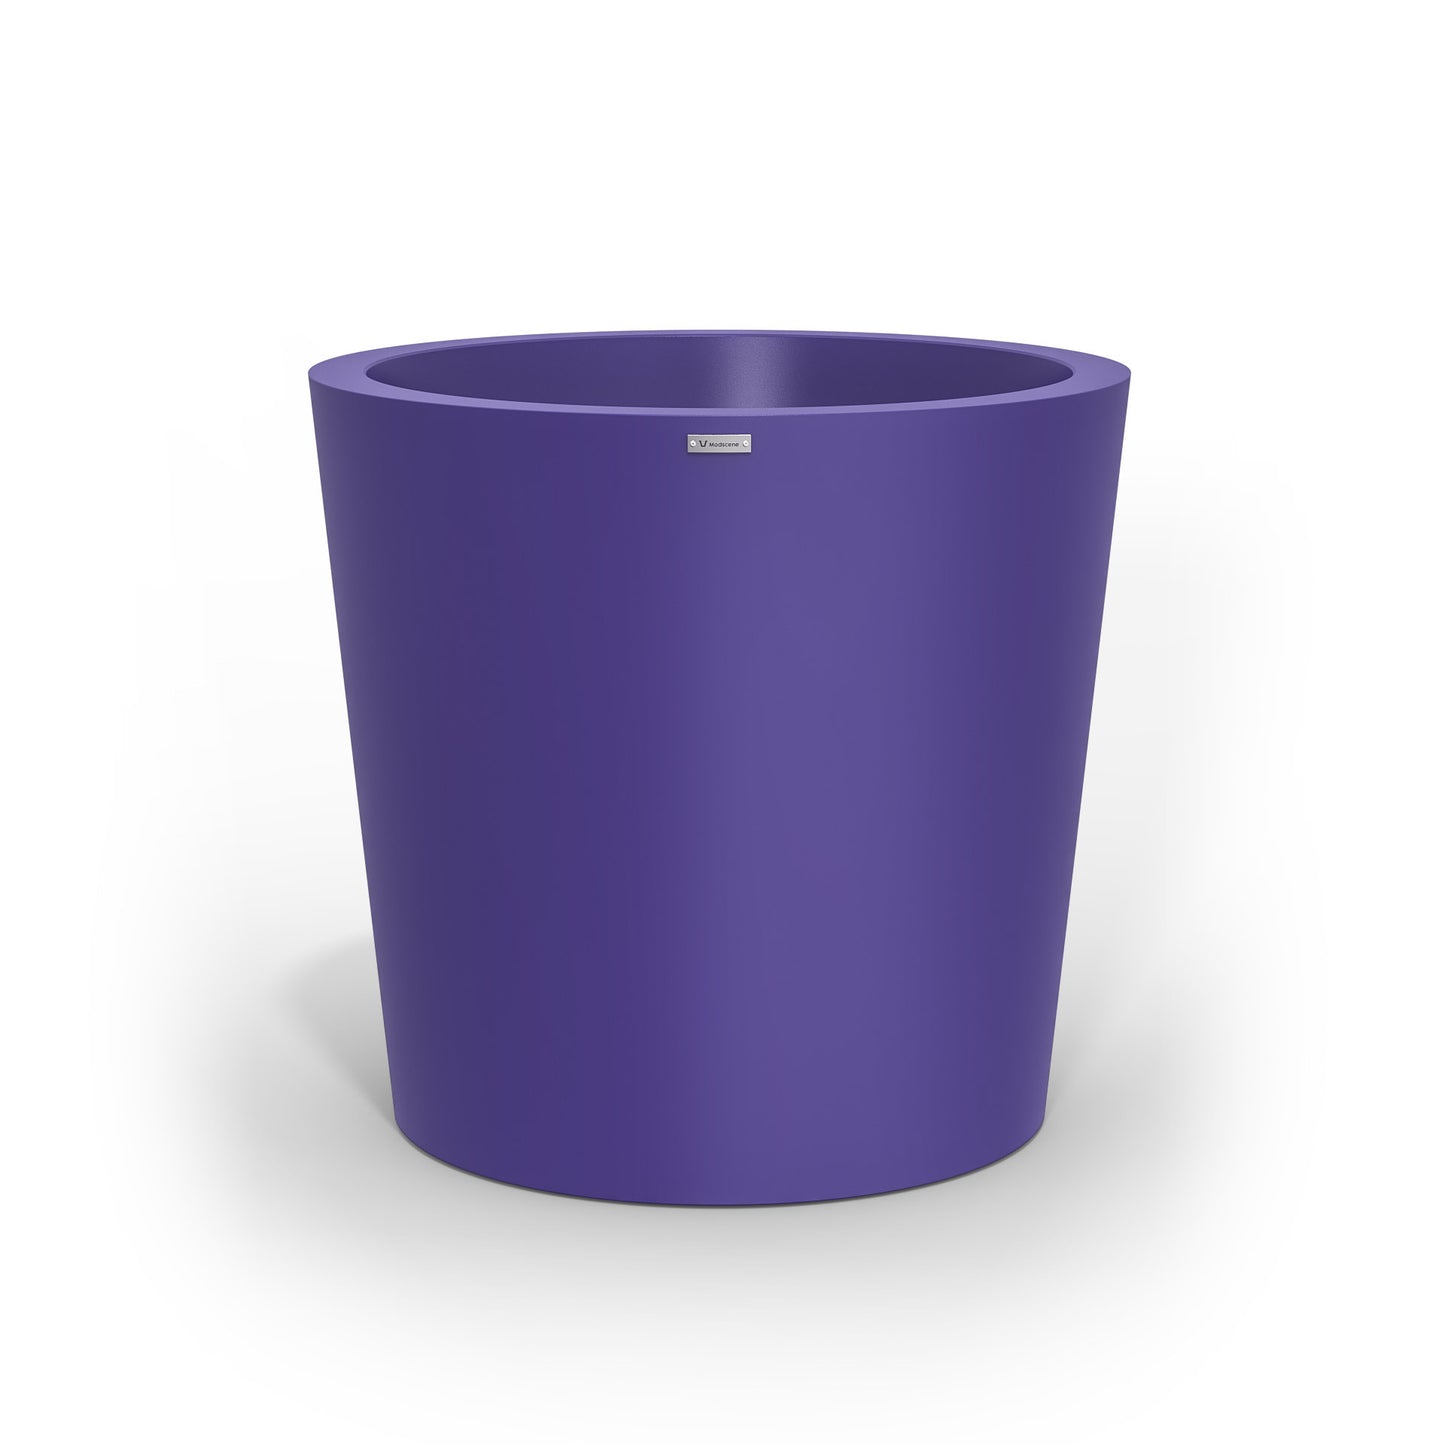 A large purple pot planter made by Modscene New Zealand.